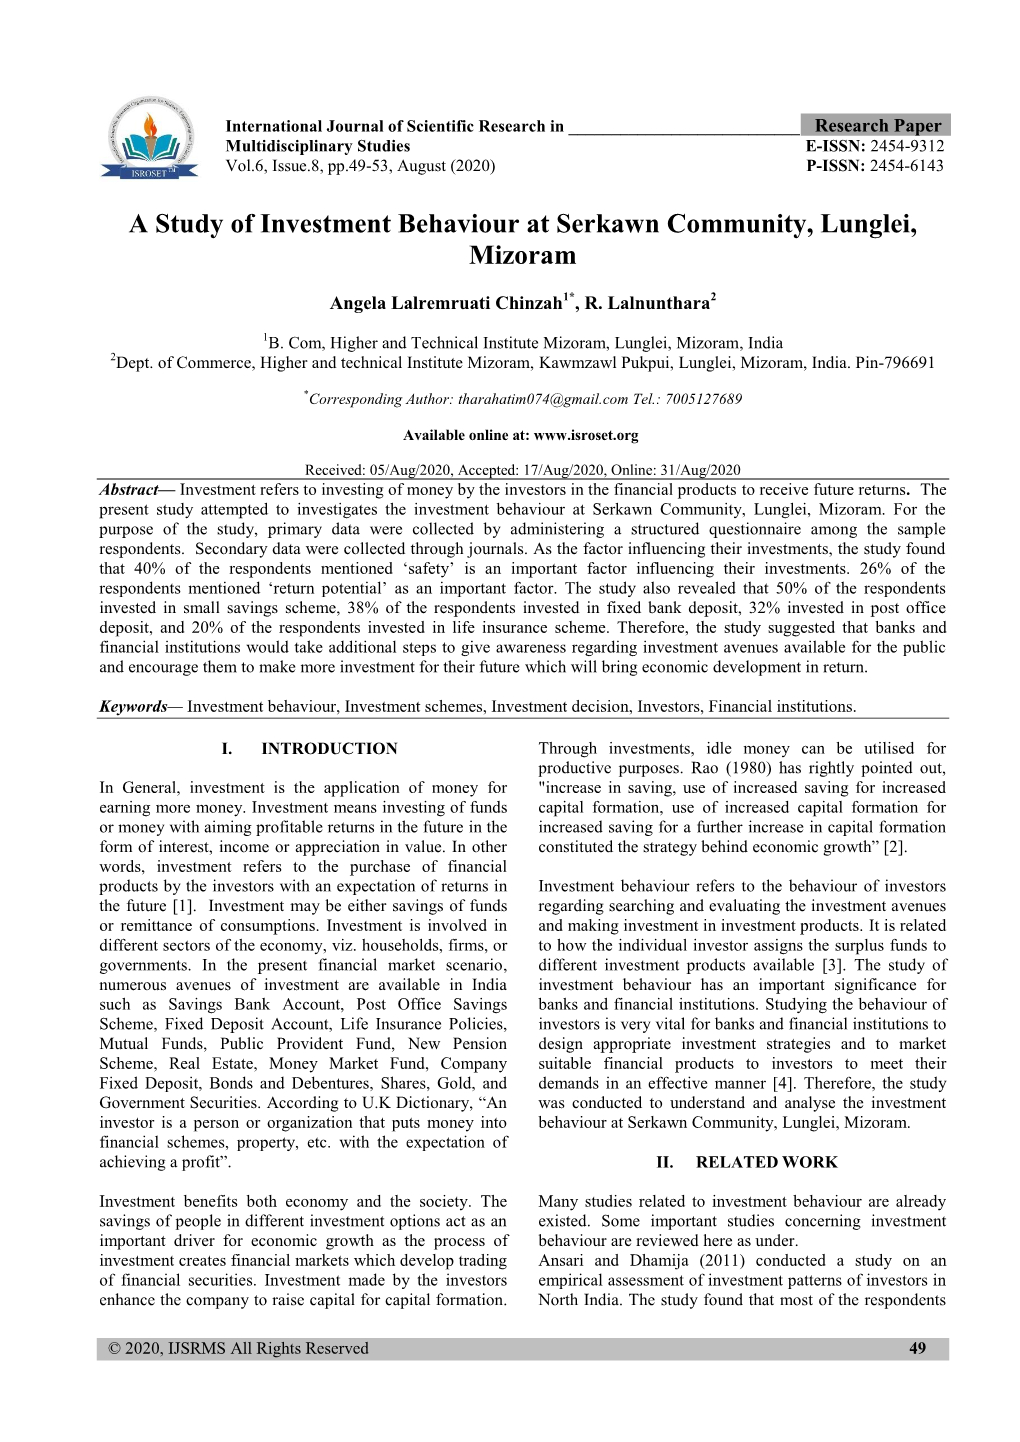 A Study of Investment Behaviour at Serkawn Community, Lunglei, Mizoram